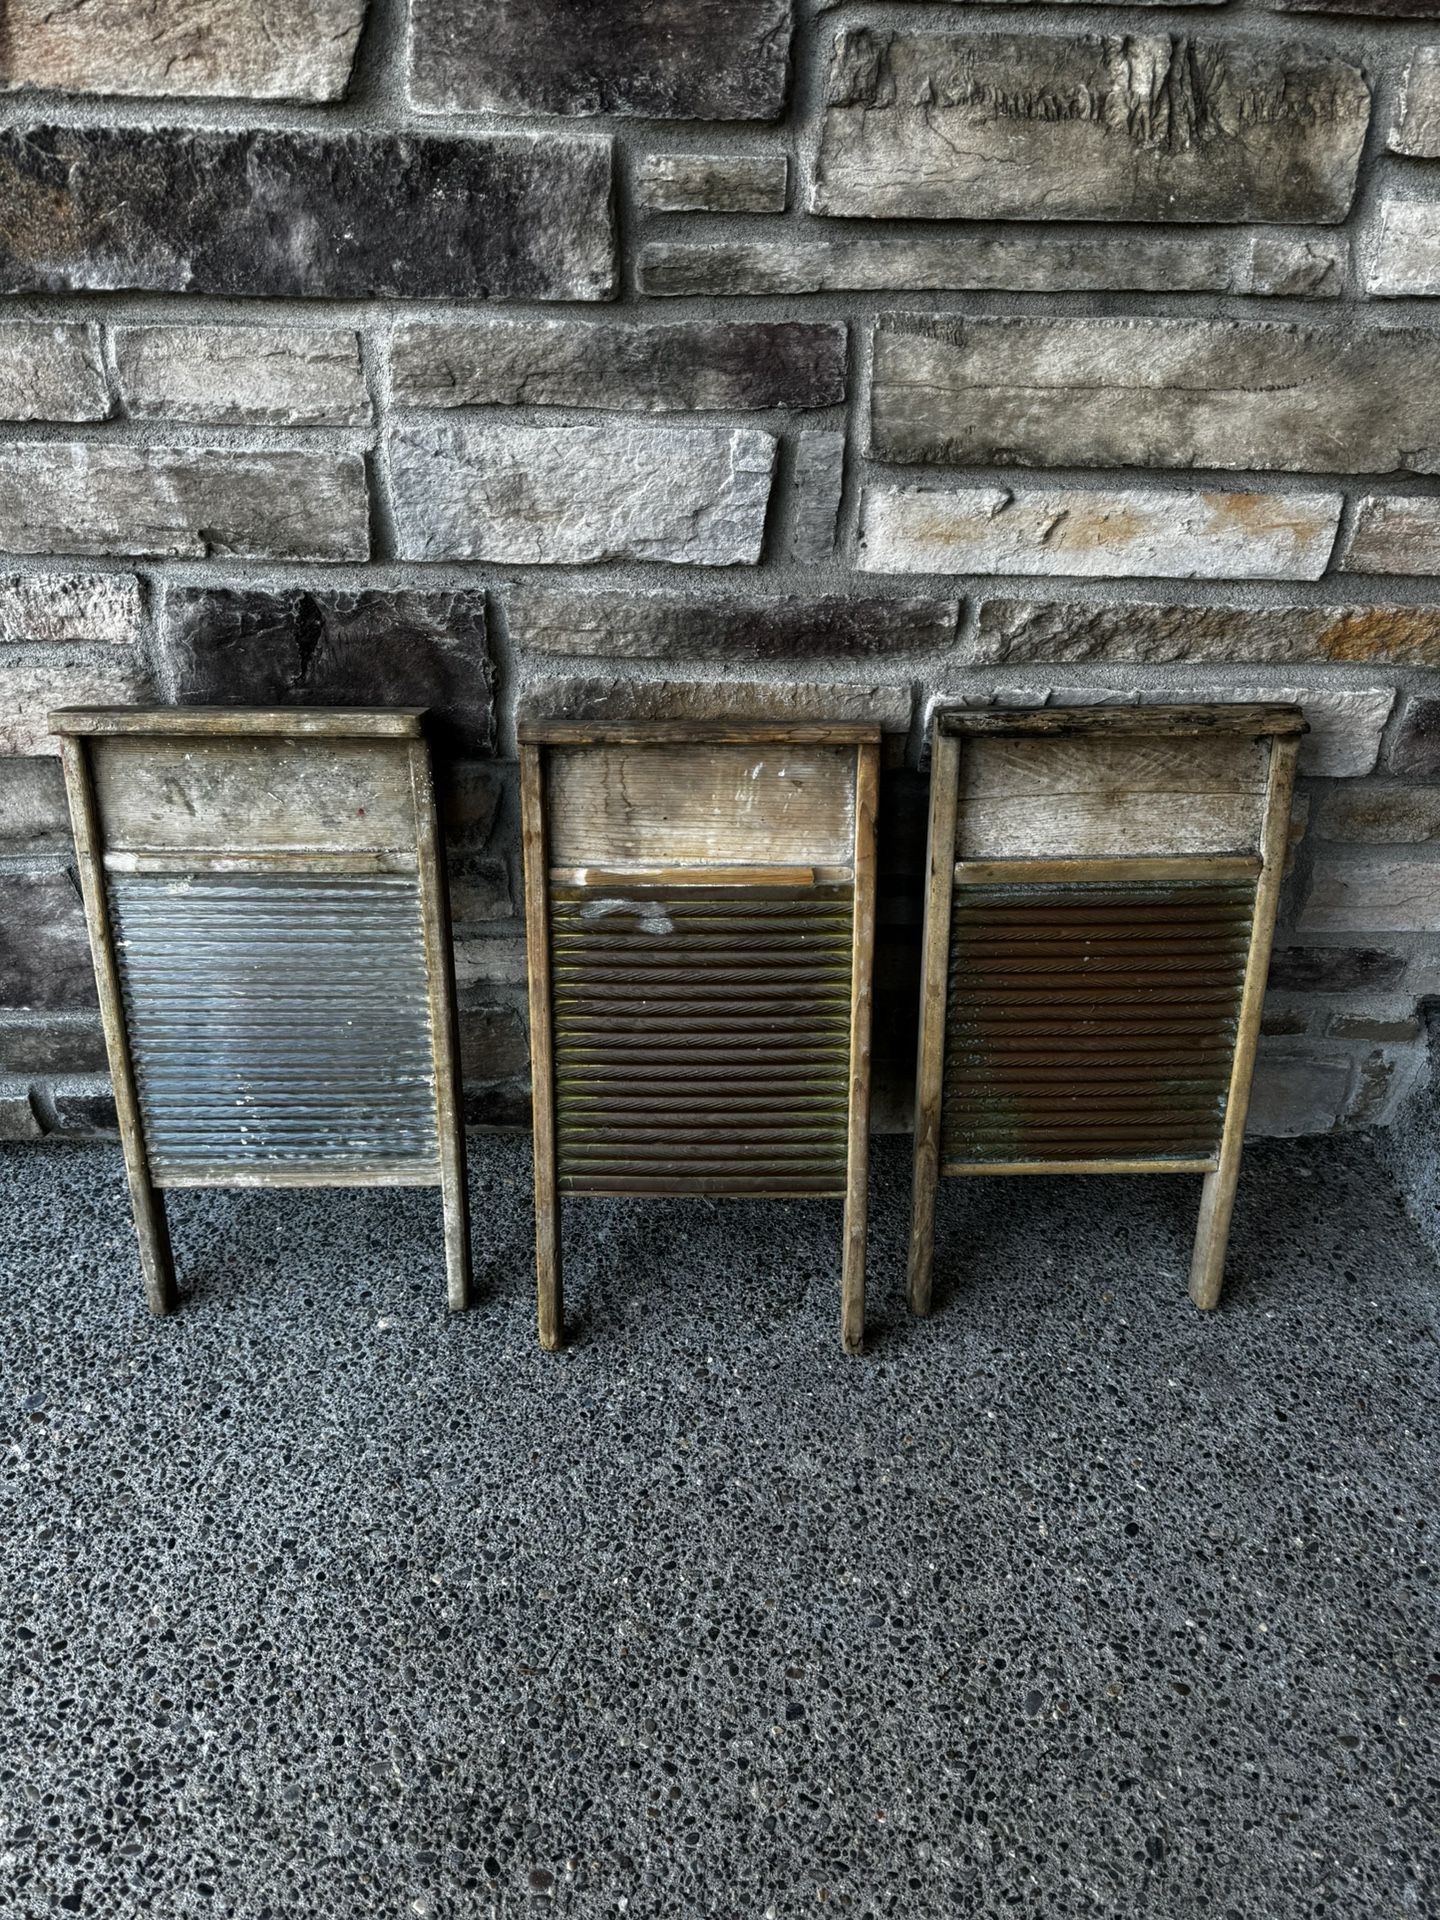 3 Antique Washboards